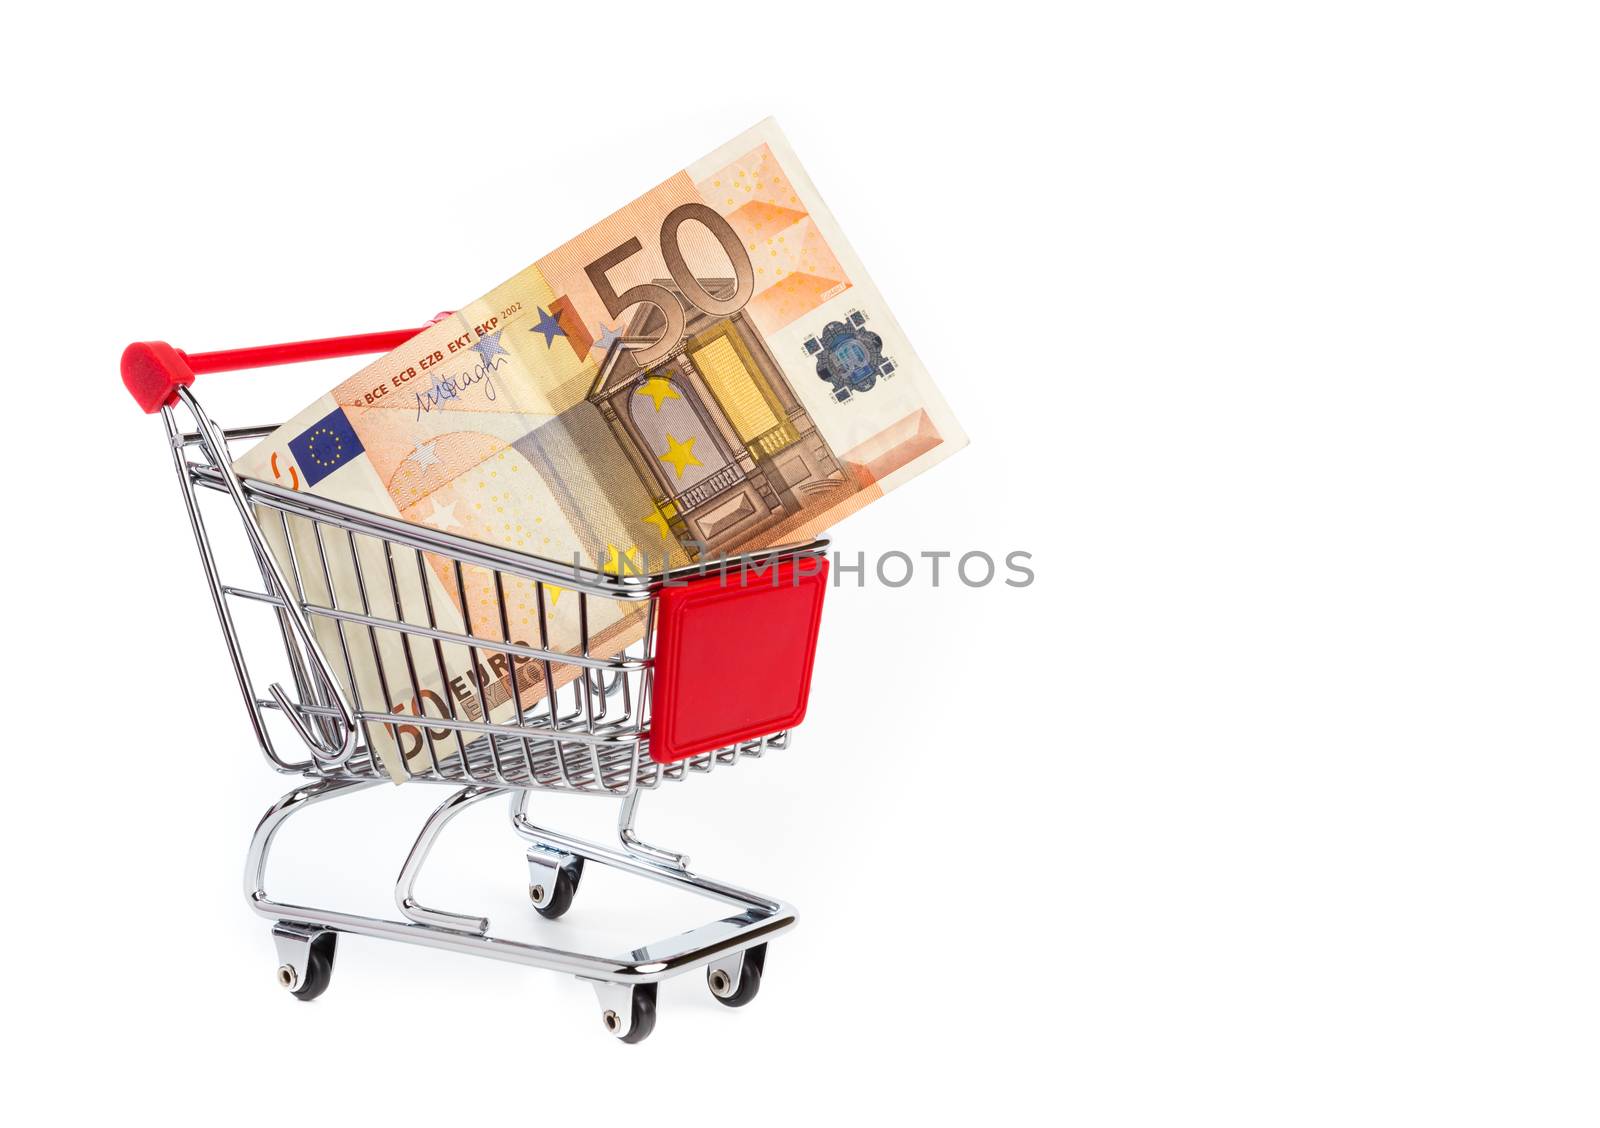 Euro in shopping cart by germanopoli